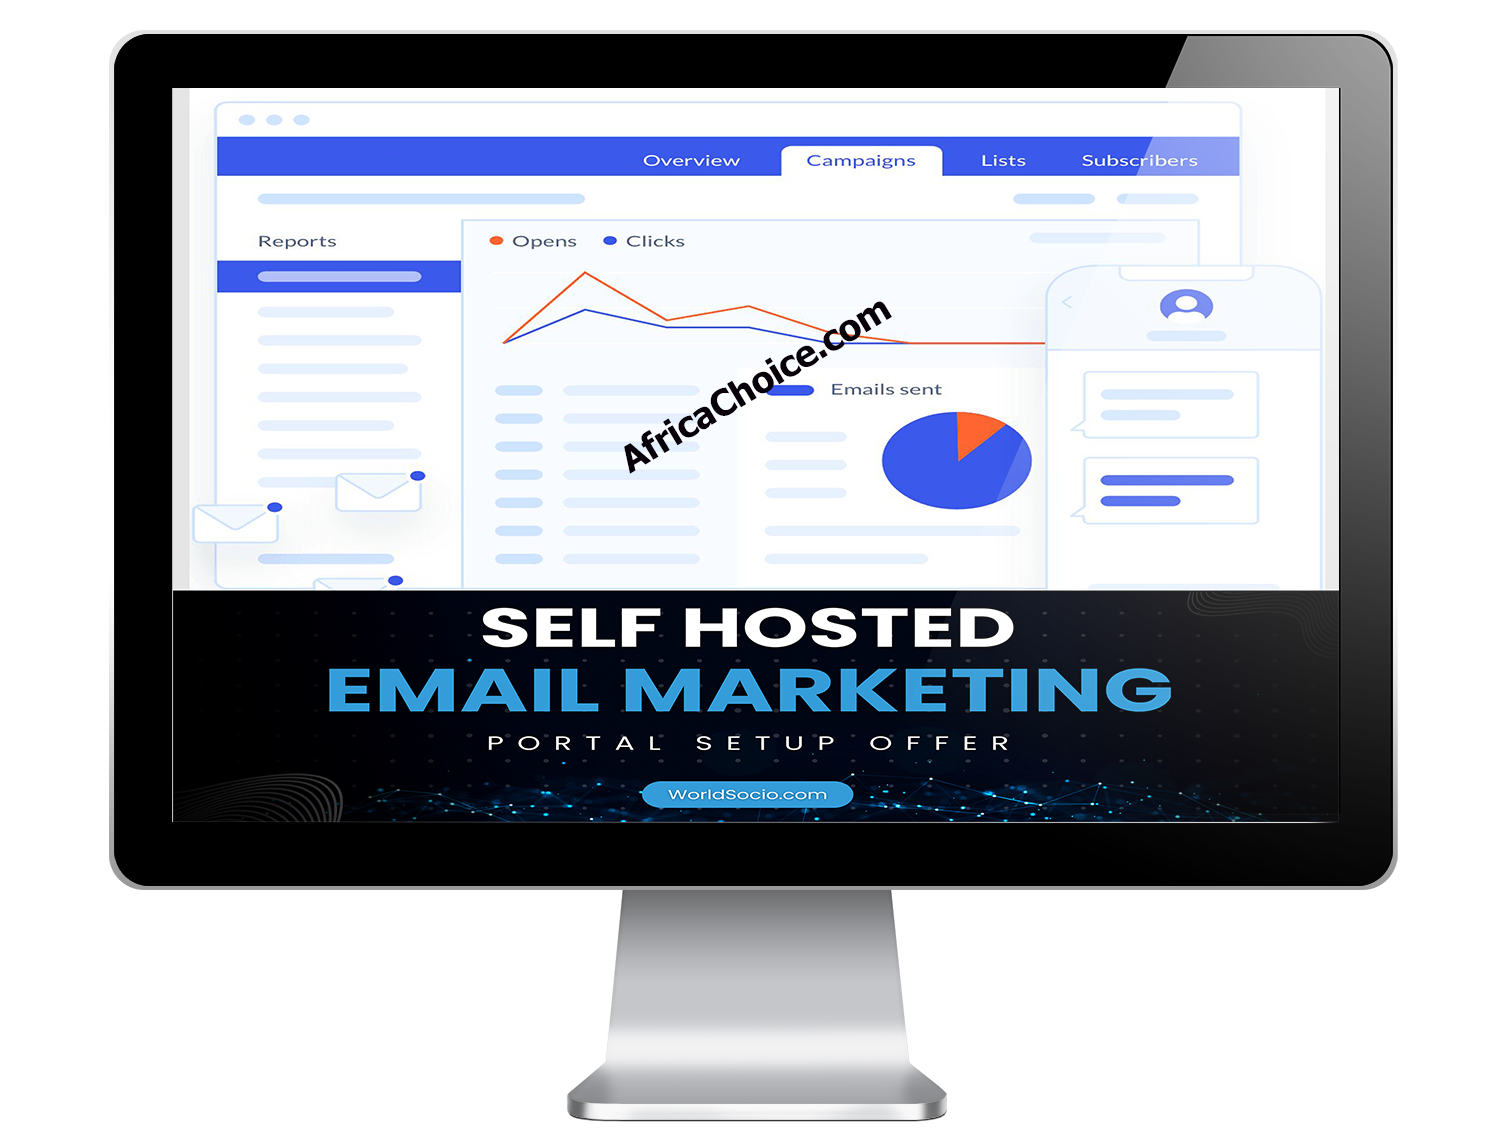 get-a-self-hosted-email-marketing-portal-setup-offer-email-marketing-portalsetup-png.1592